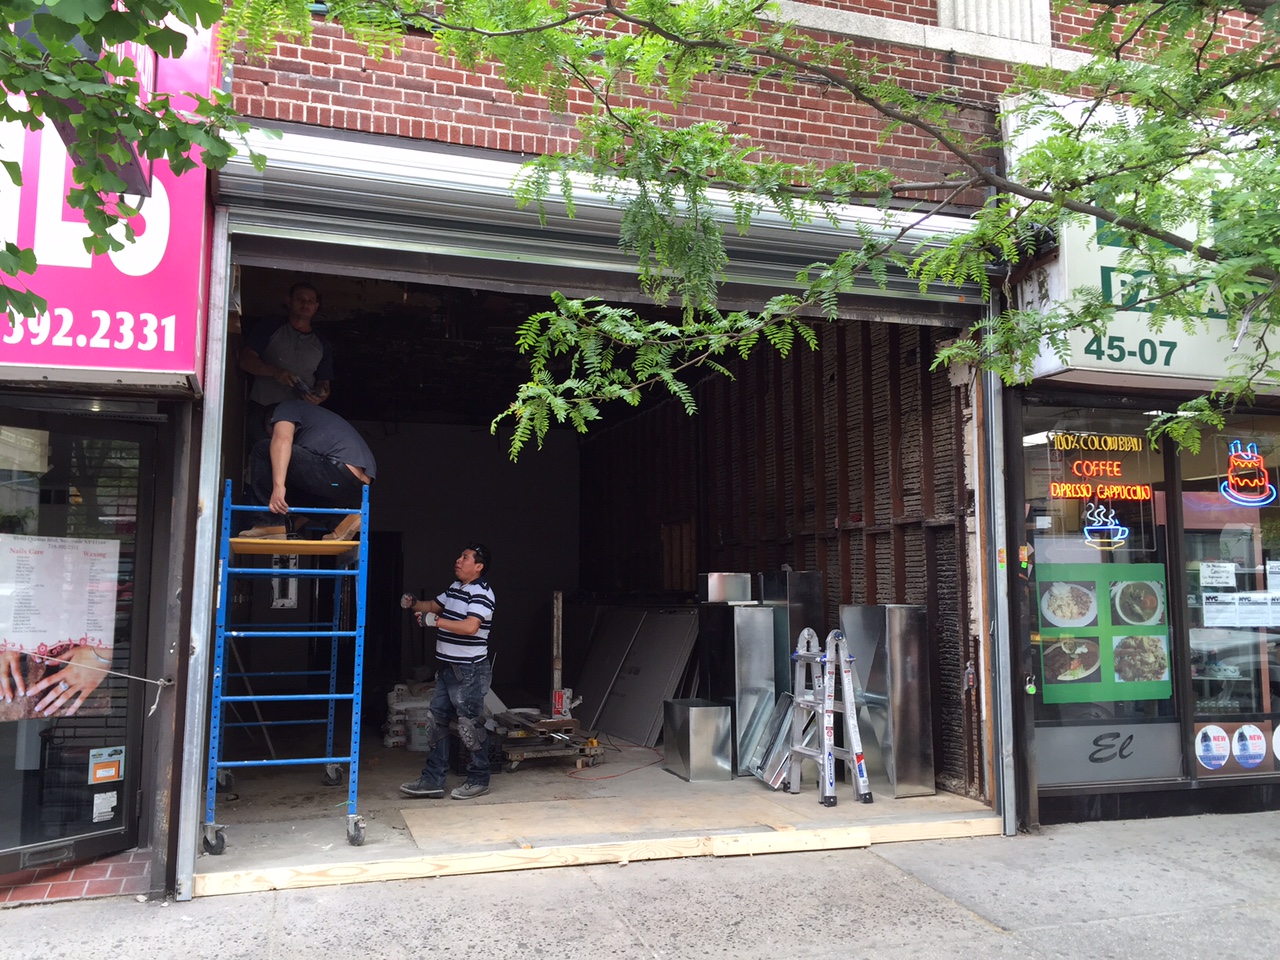 Queens Blvd Restaurant Expands, Takes Over Space Next Door - Sunnyside Post